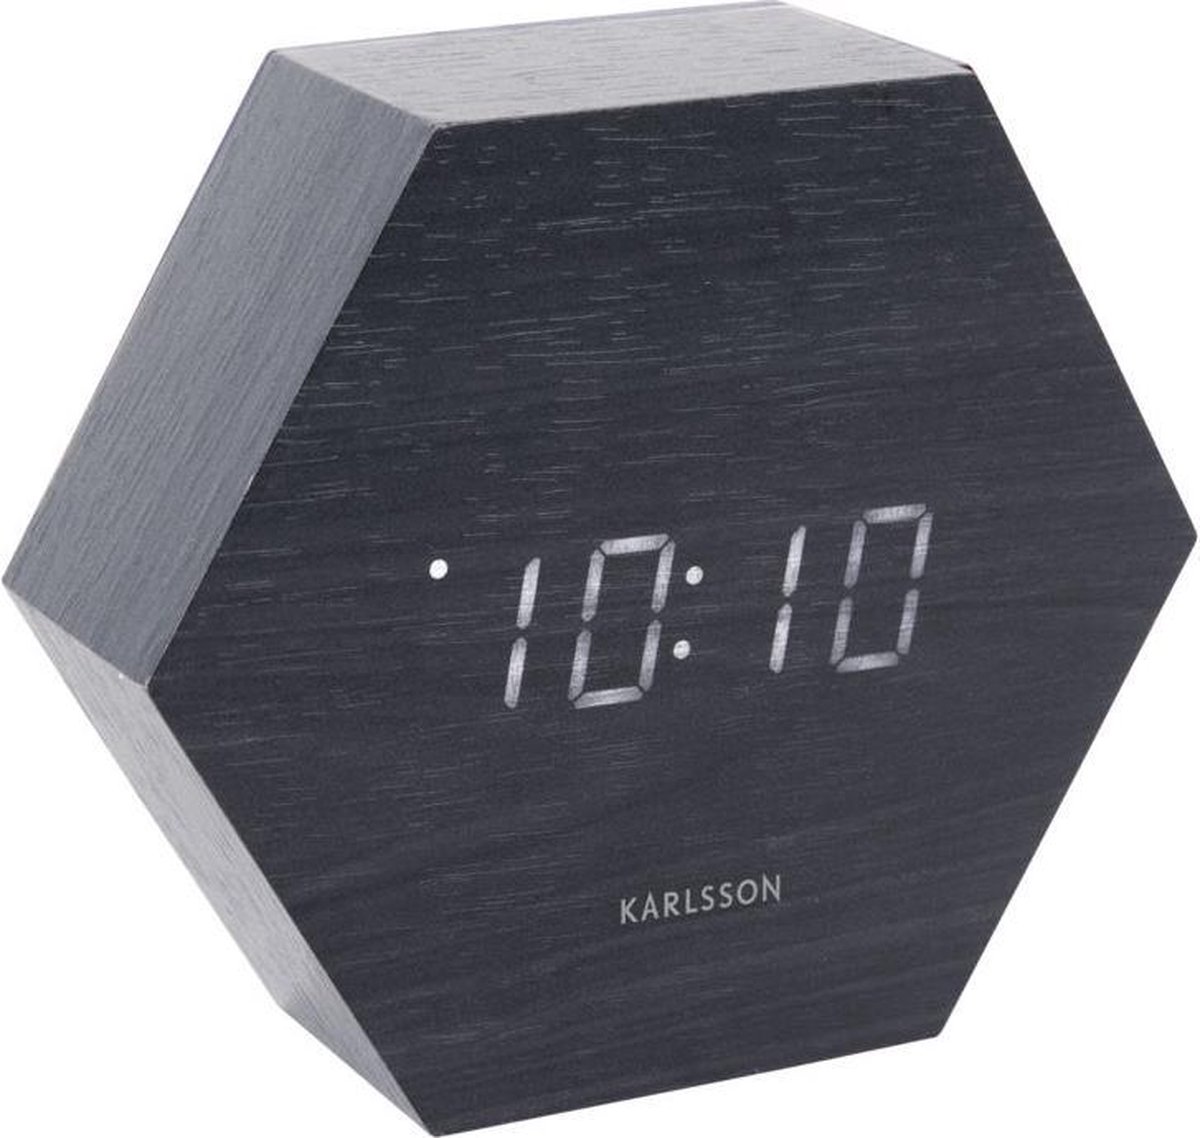 Karlsson Hexagon Wekker 13 x 11 cm - Negro